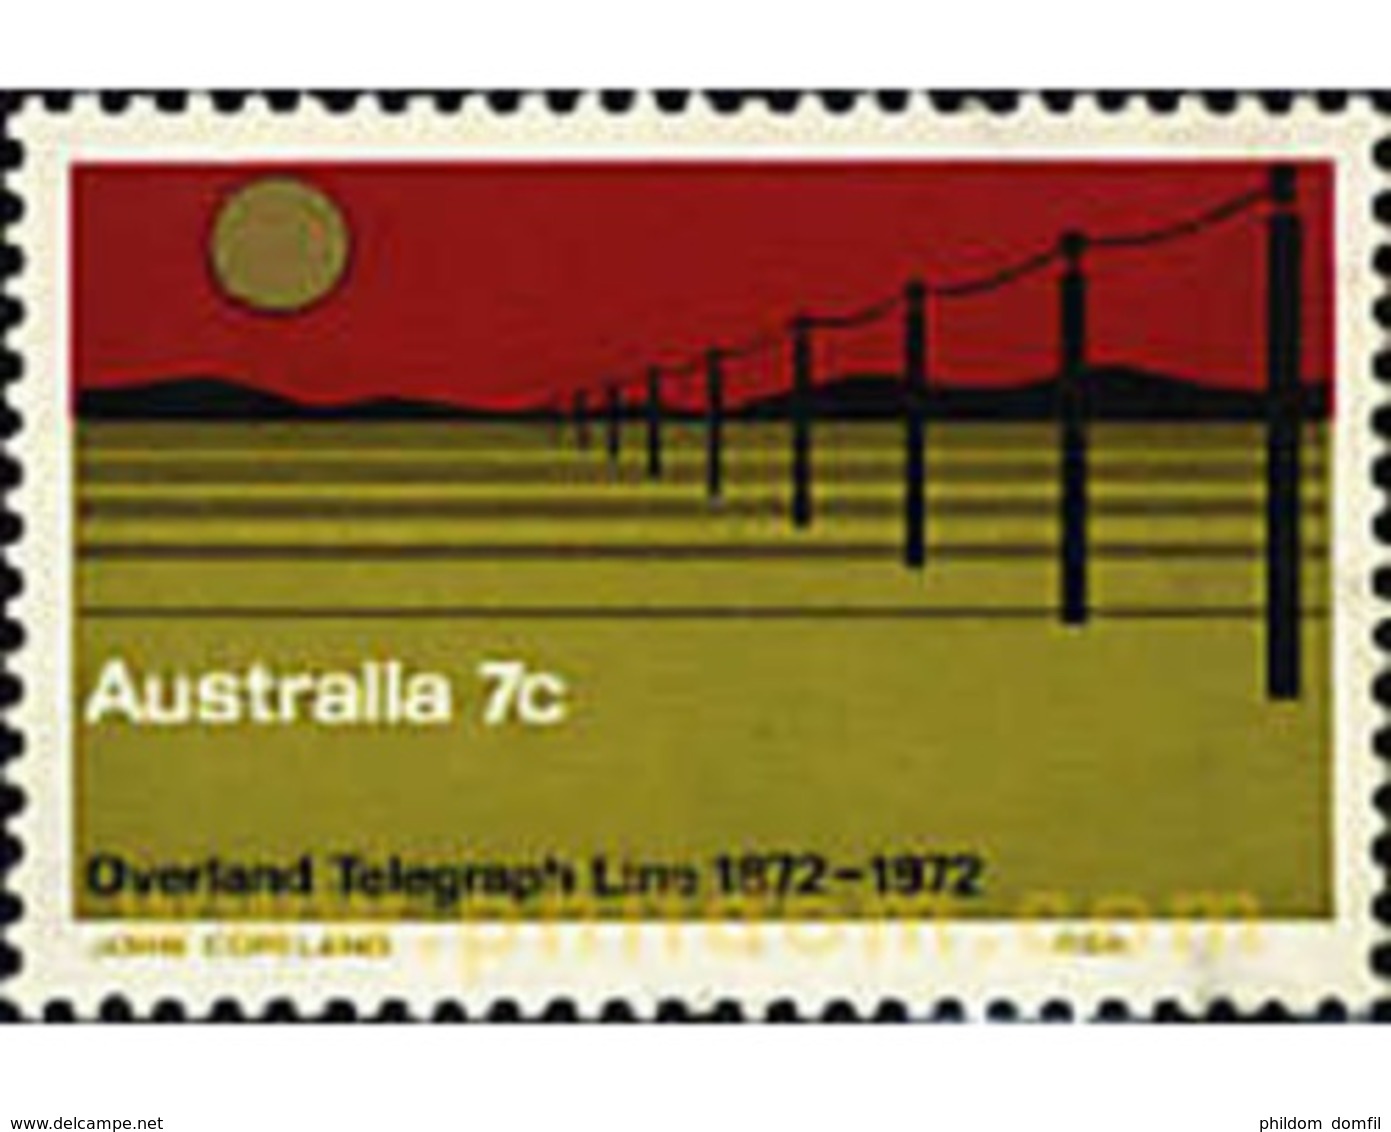 Ref. 52456 * MNH * - AUSTRALIA. 1972. CENTENARIO DE LAS COMUNICACIONES POR TELEGRAFO - Mint Stamps